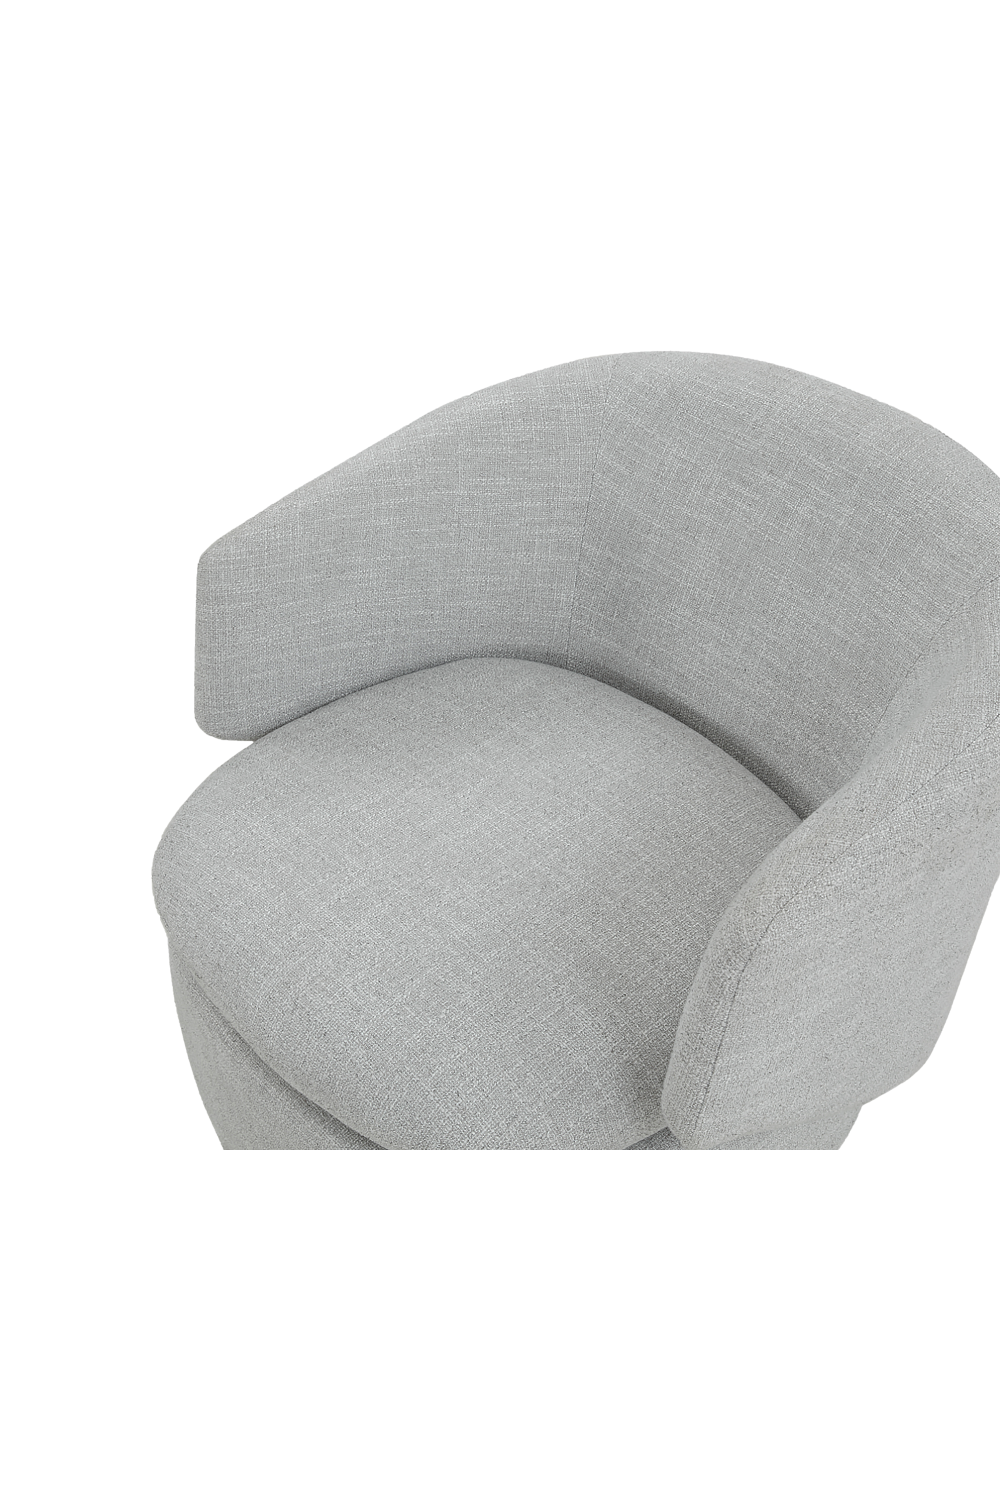 Light Gray Swivel Chair | Liang & Eimil Scarpa | OROA.com